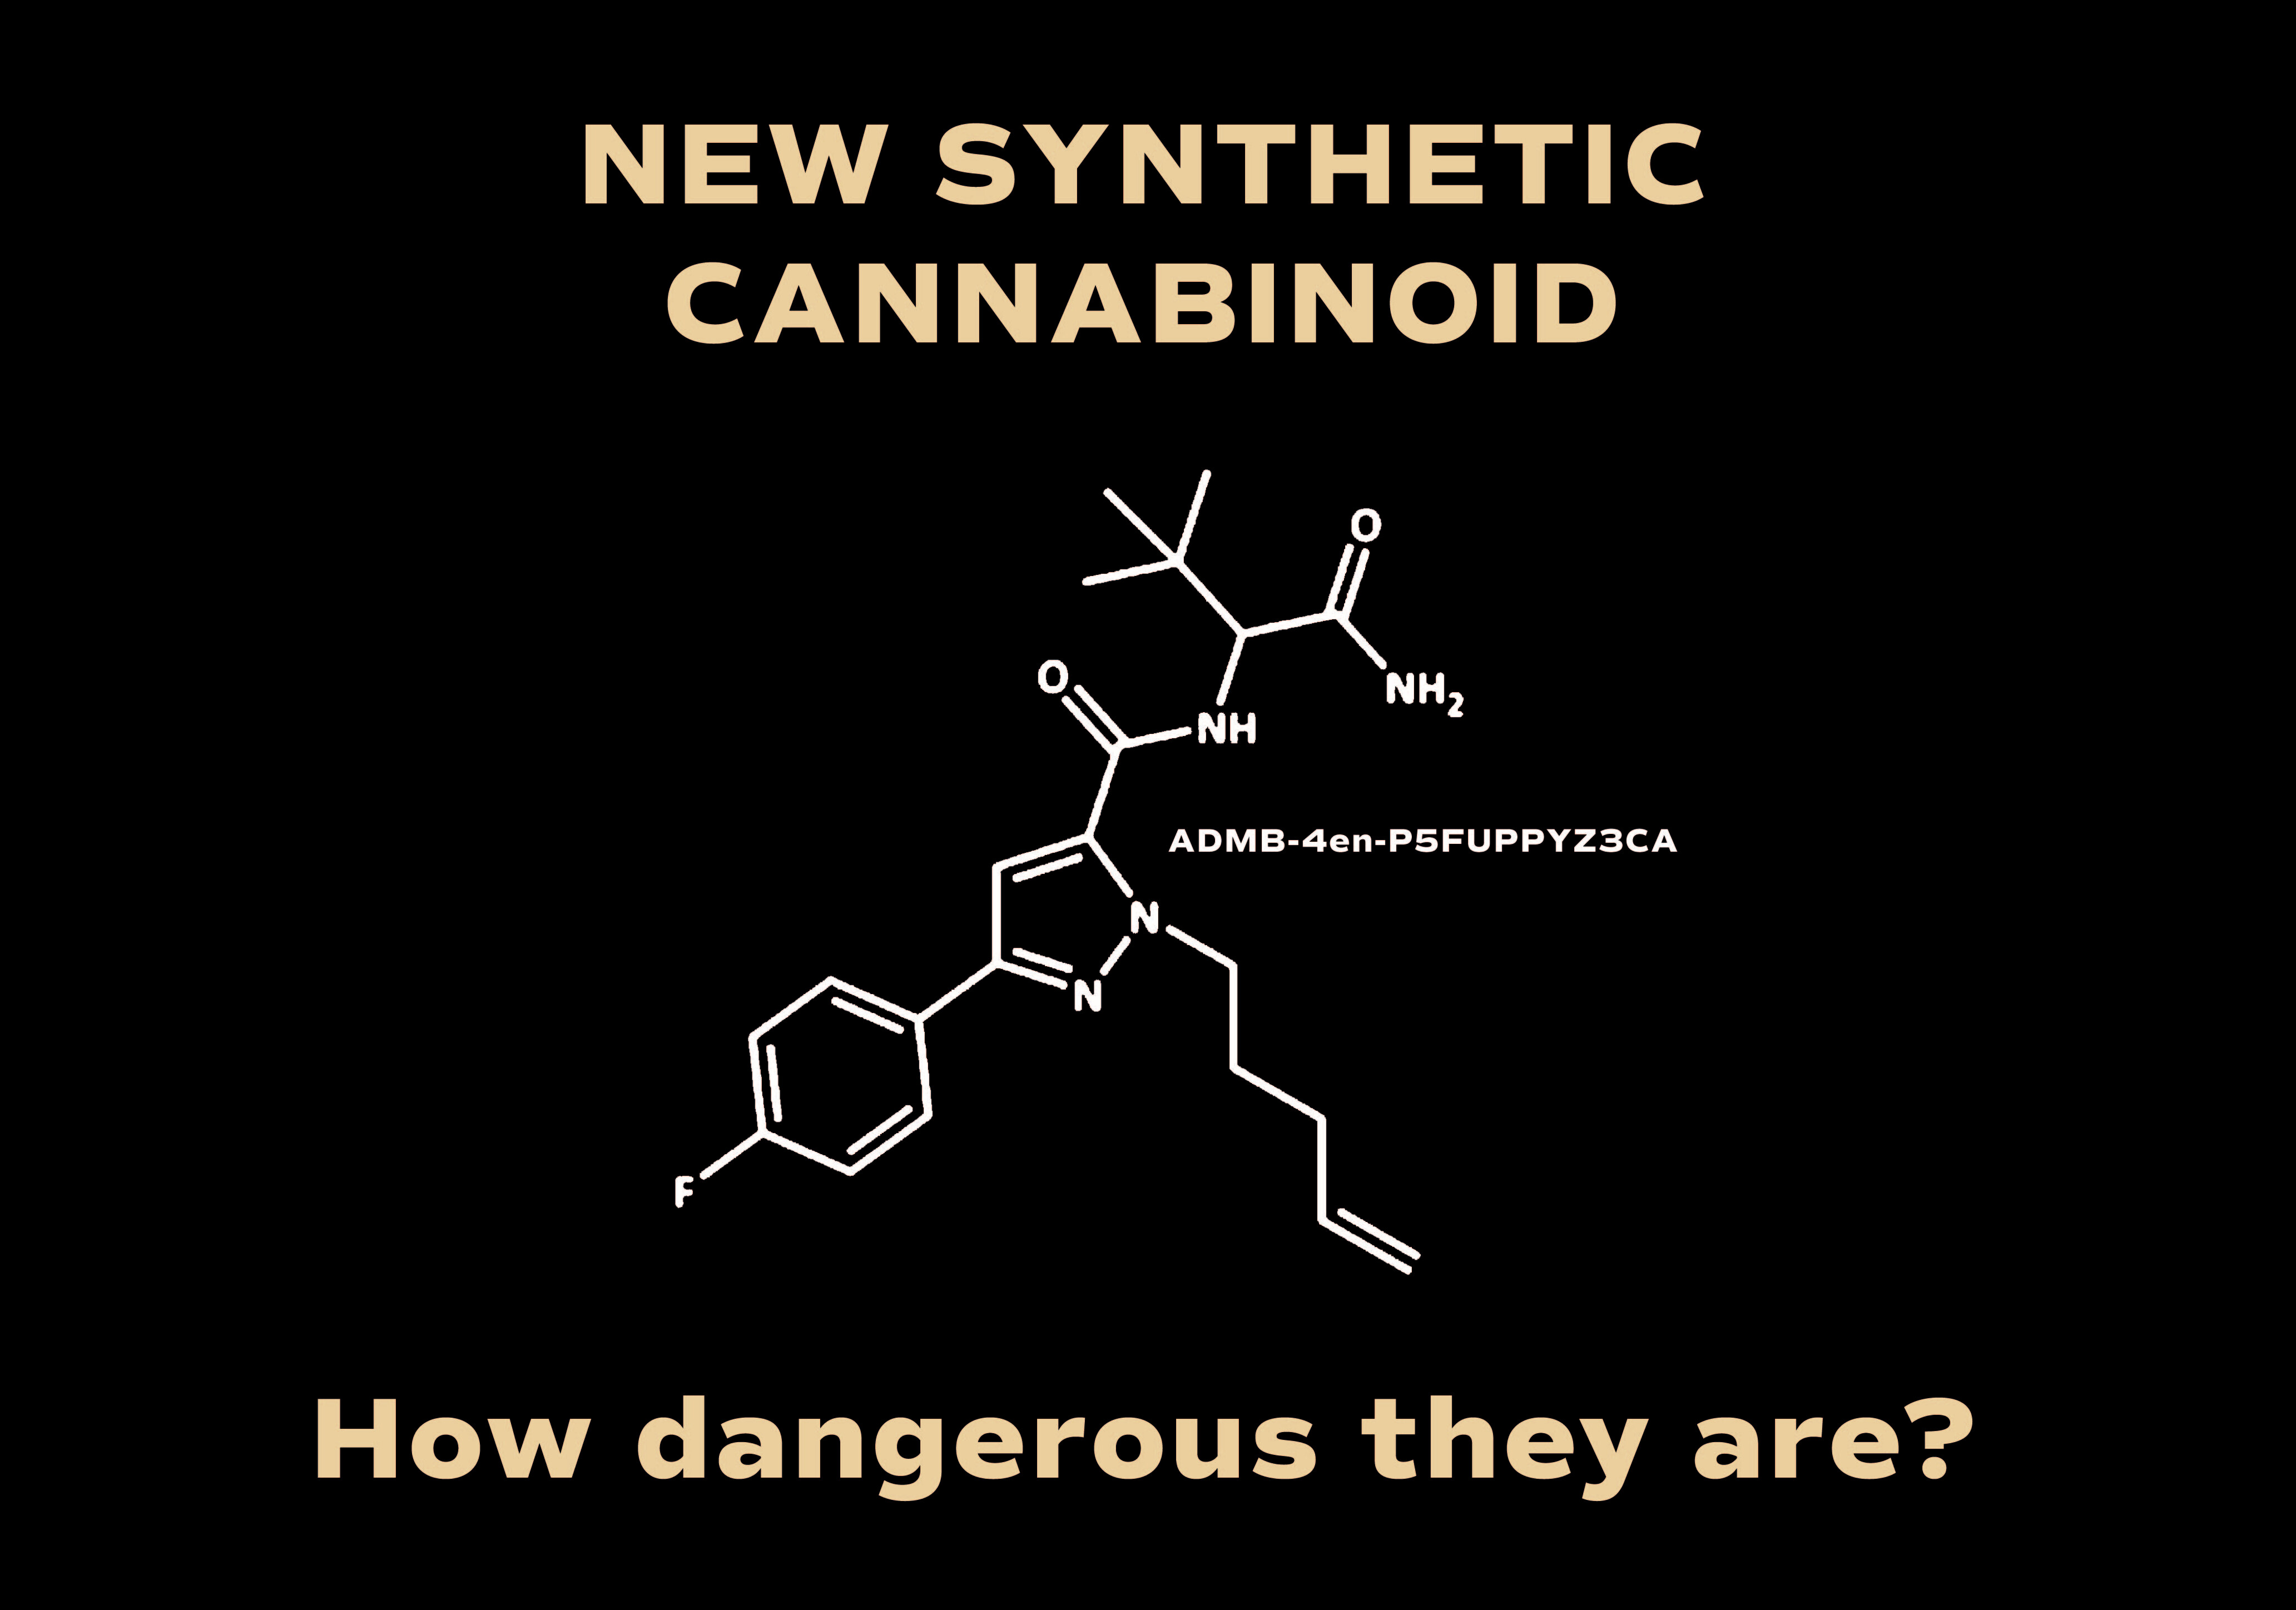 New synthetic cannabinoids